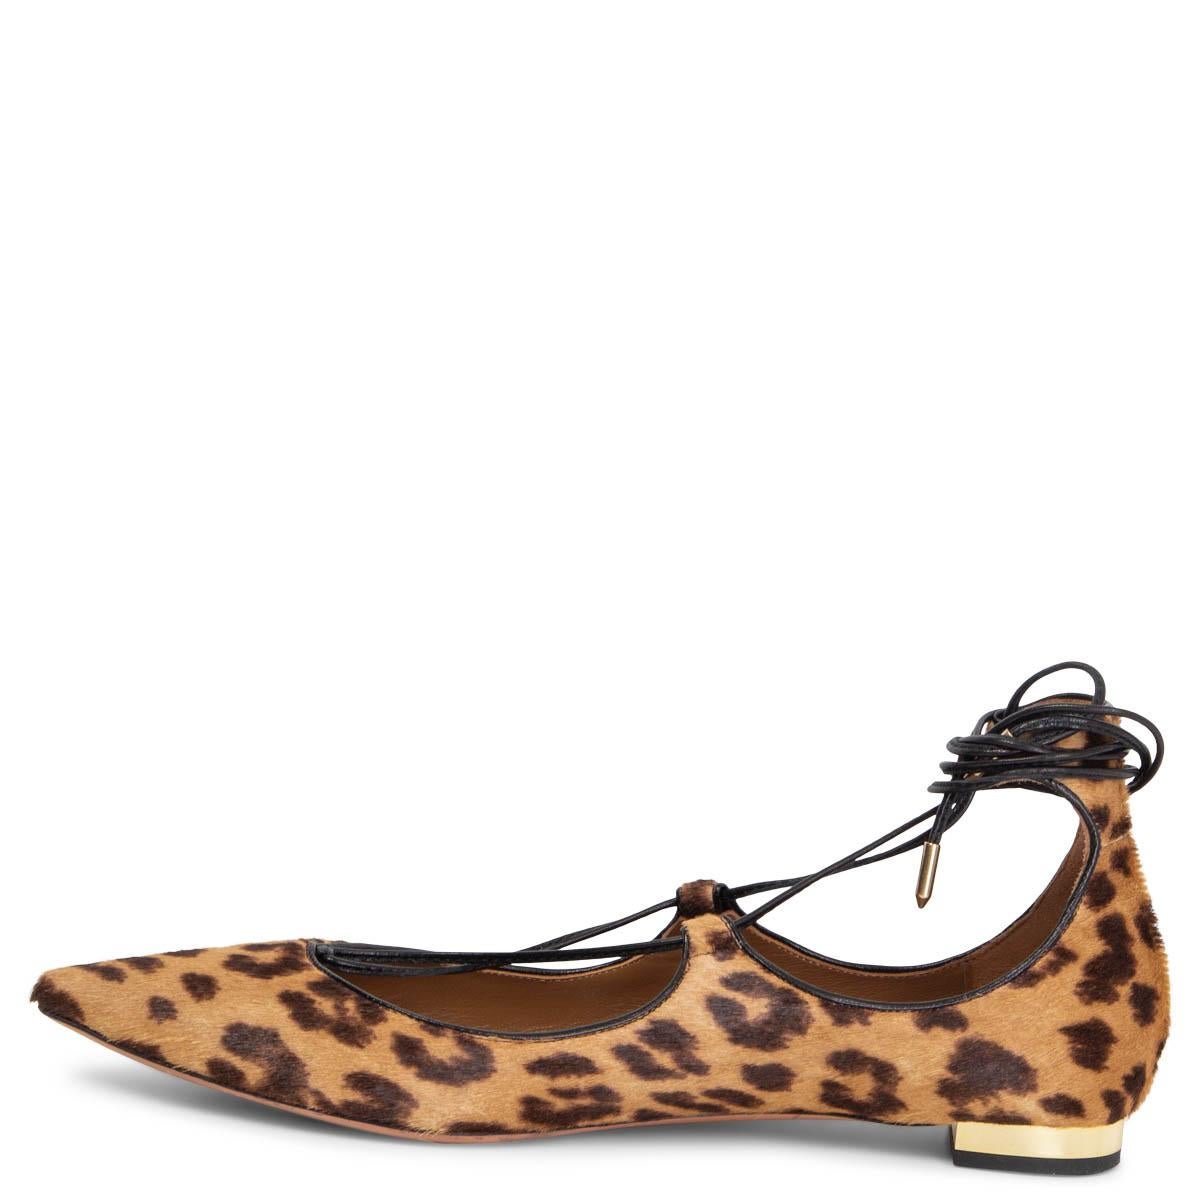 Marron AQUAZZURA tan brown calf hair LEOPARD CHRISTY Ballet Flats Shoes 39.5 en vente